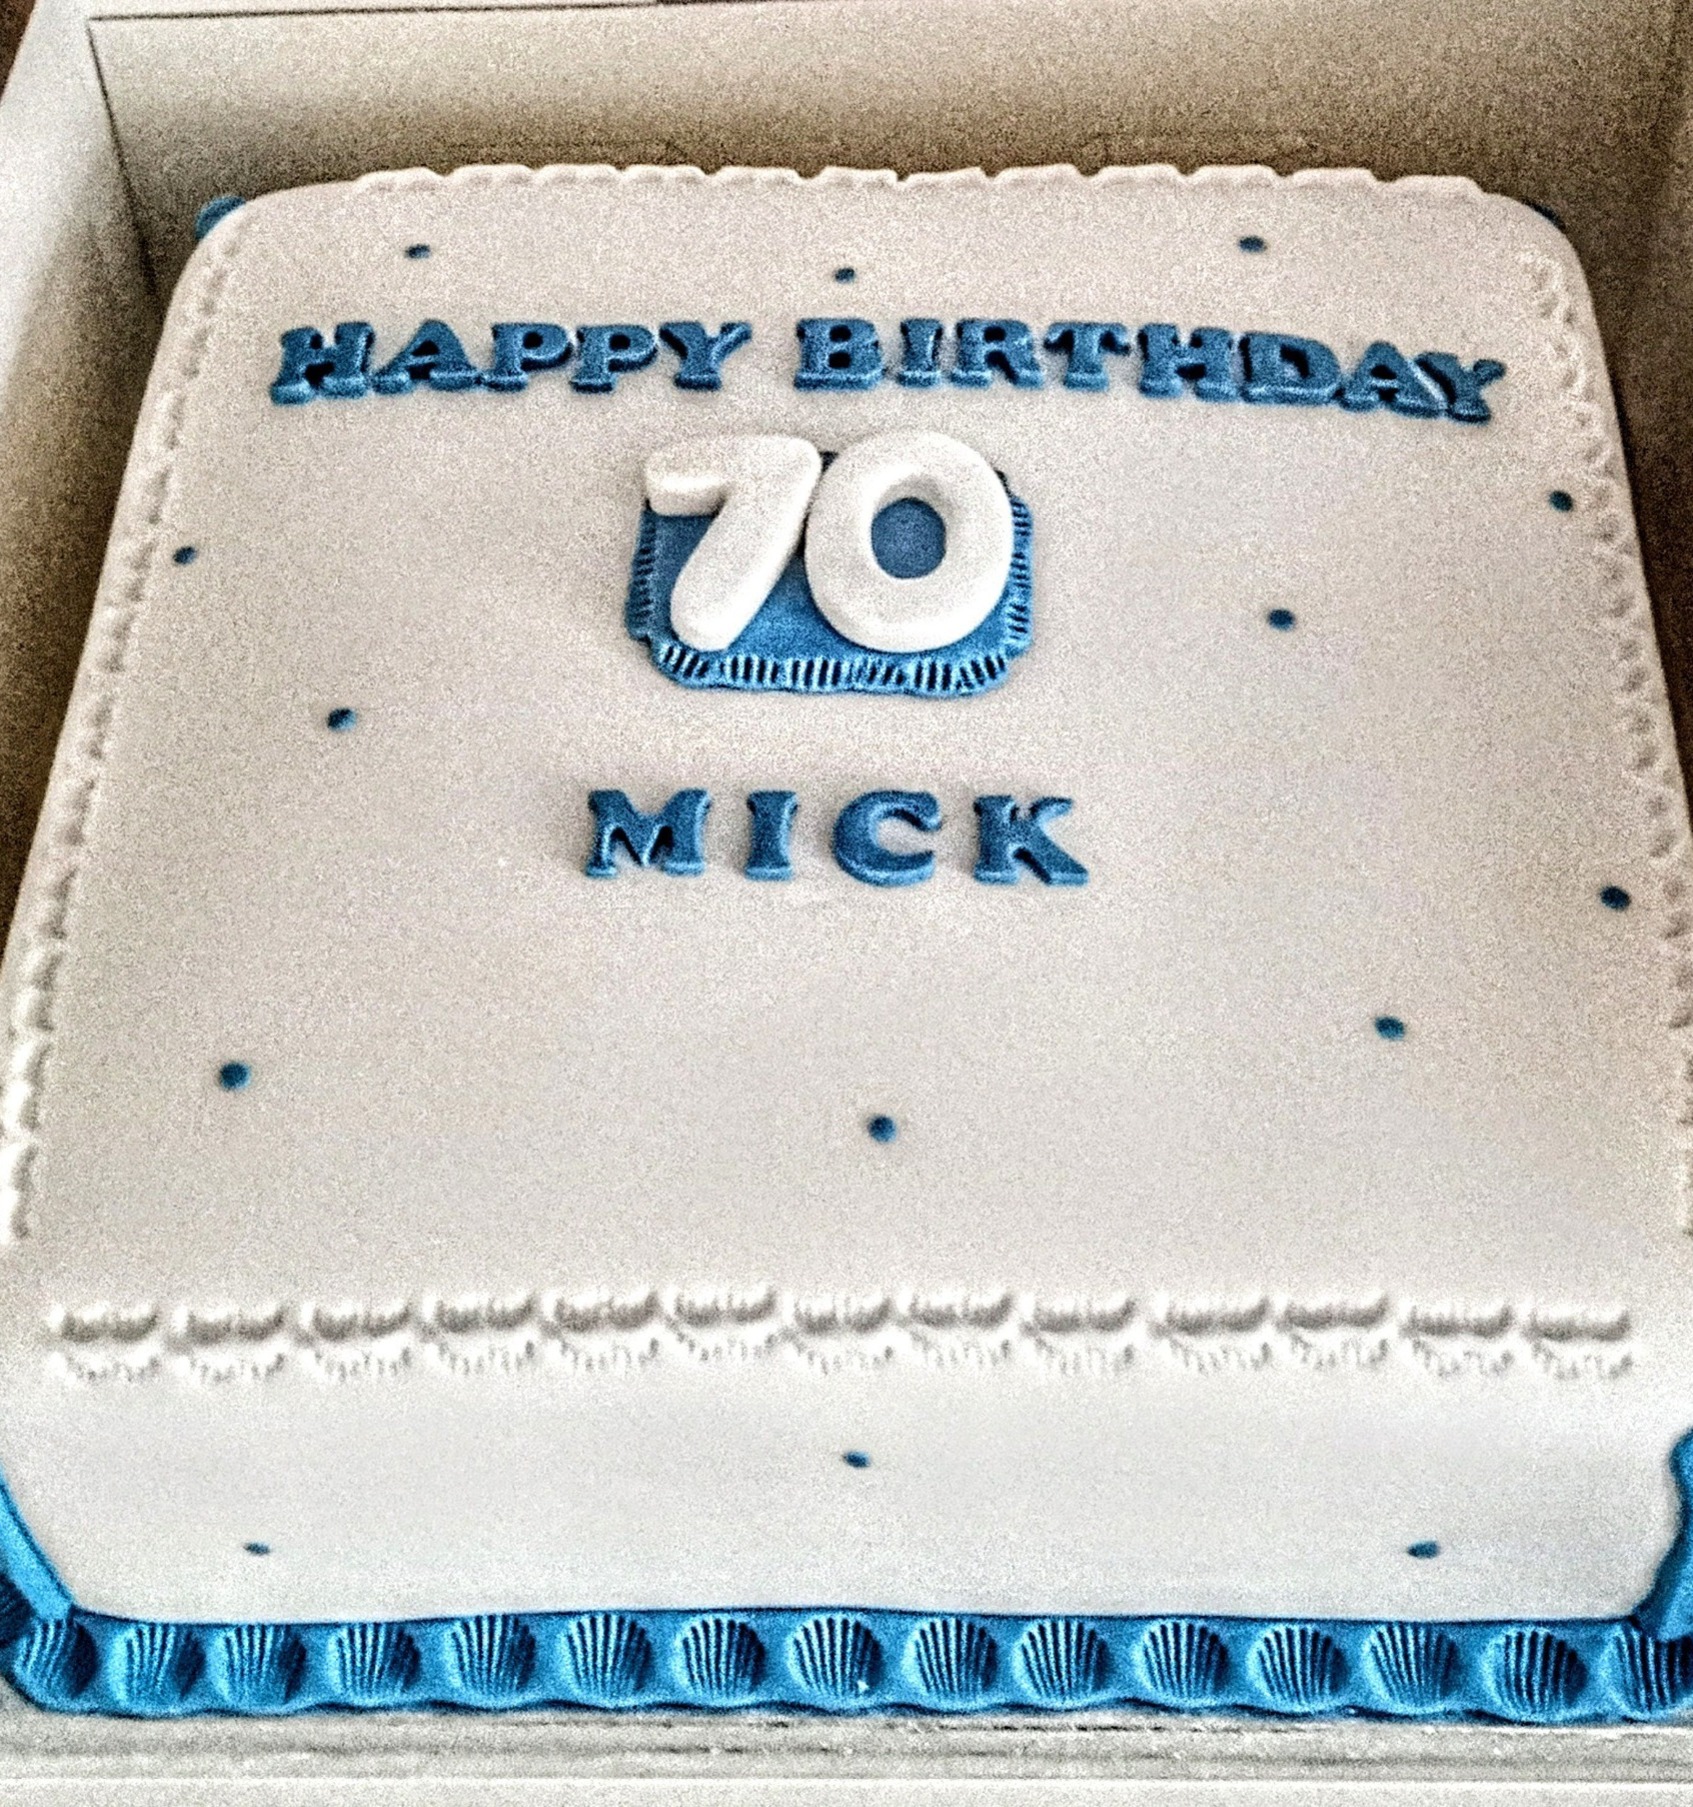 Plain elegant blue and white mens 70th birthday cake